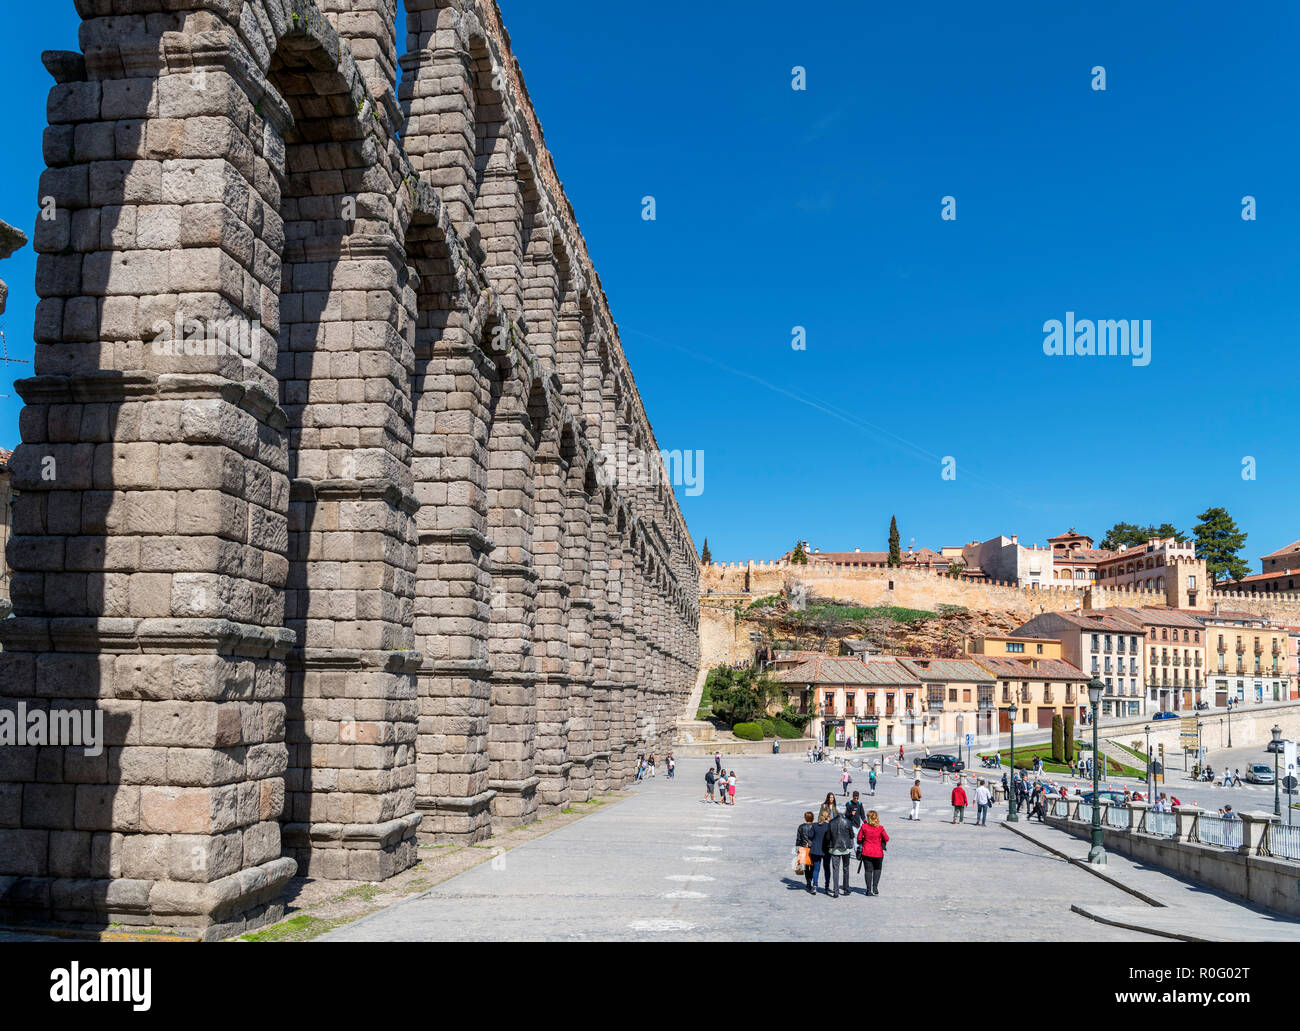 Segovia aqueduct. The 1st centry Roman aqueduct from the Plaza Artillería, Segovia, Castilla y Leon, Spain Stock Photo